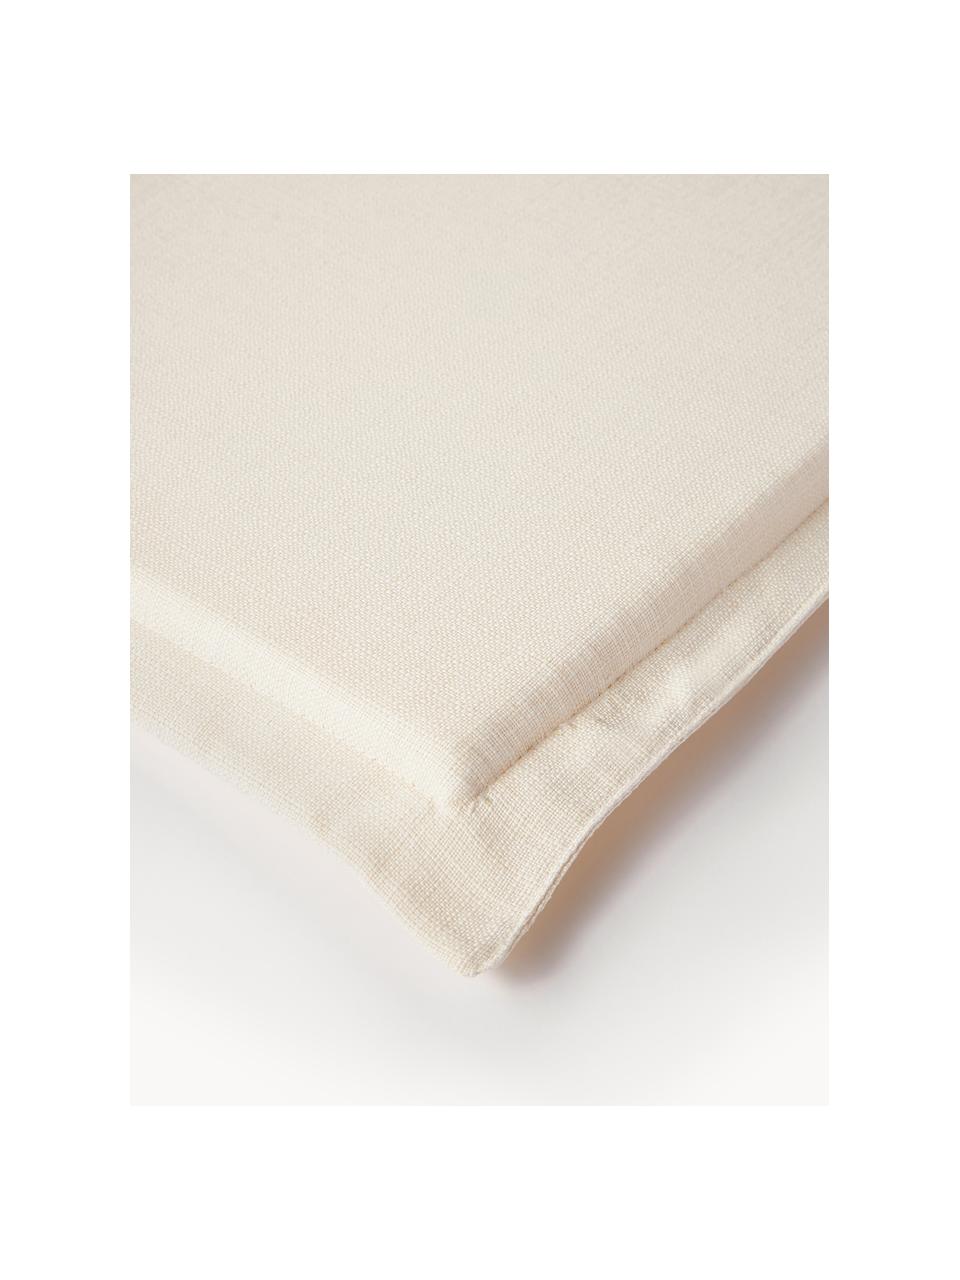 Cuscino panca monocromatico Ortun, Rivestimento: 100% polipropilene, Bianco latte, Larg. 48 x Lung. 120 cm